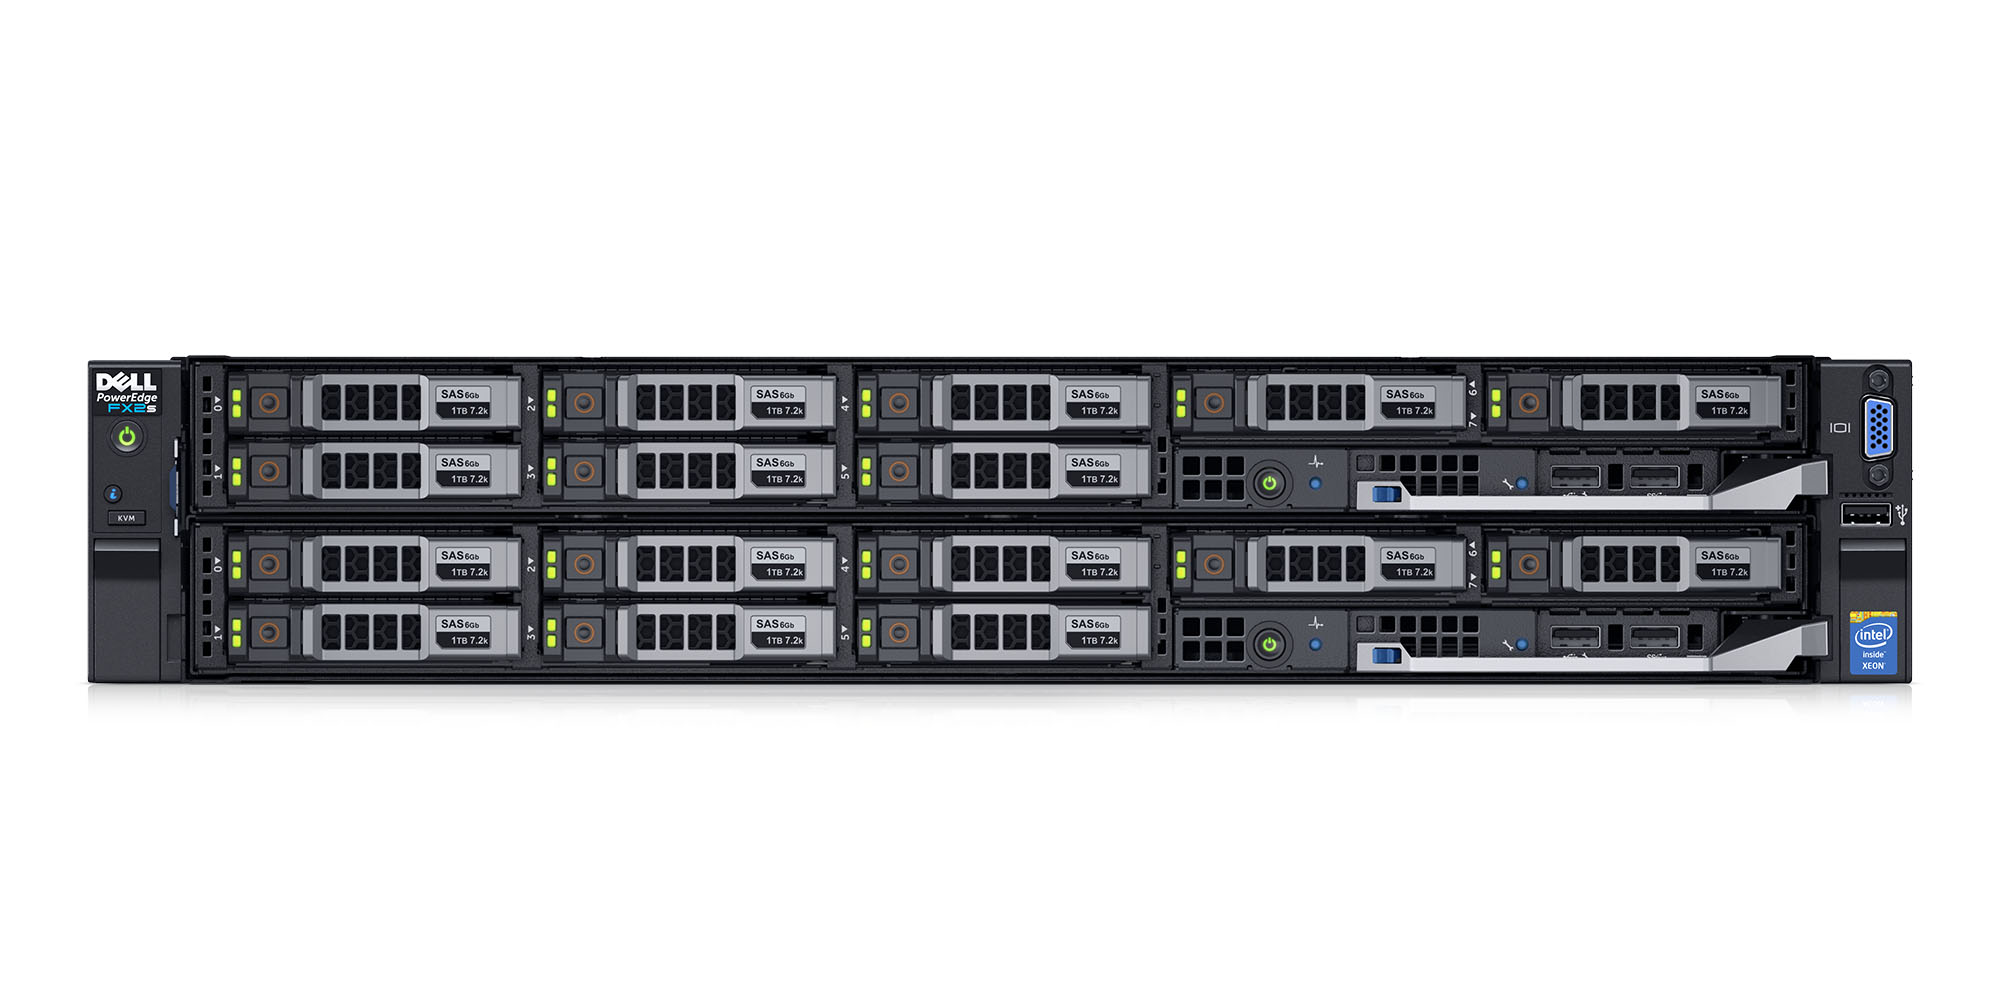 PowerEdge FX2s Rack Server with FC830 Blades